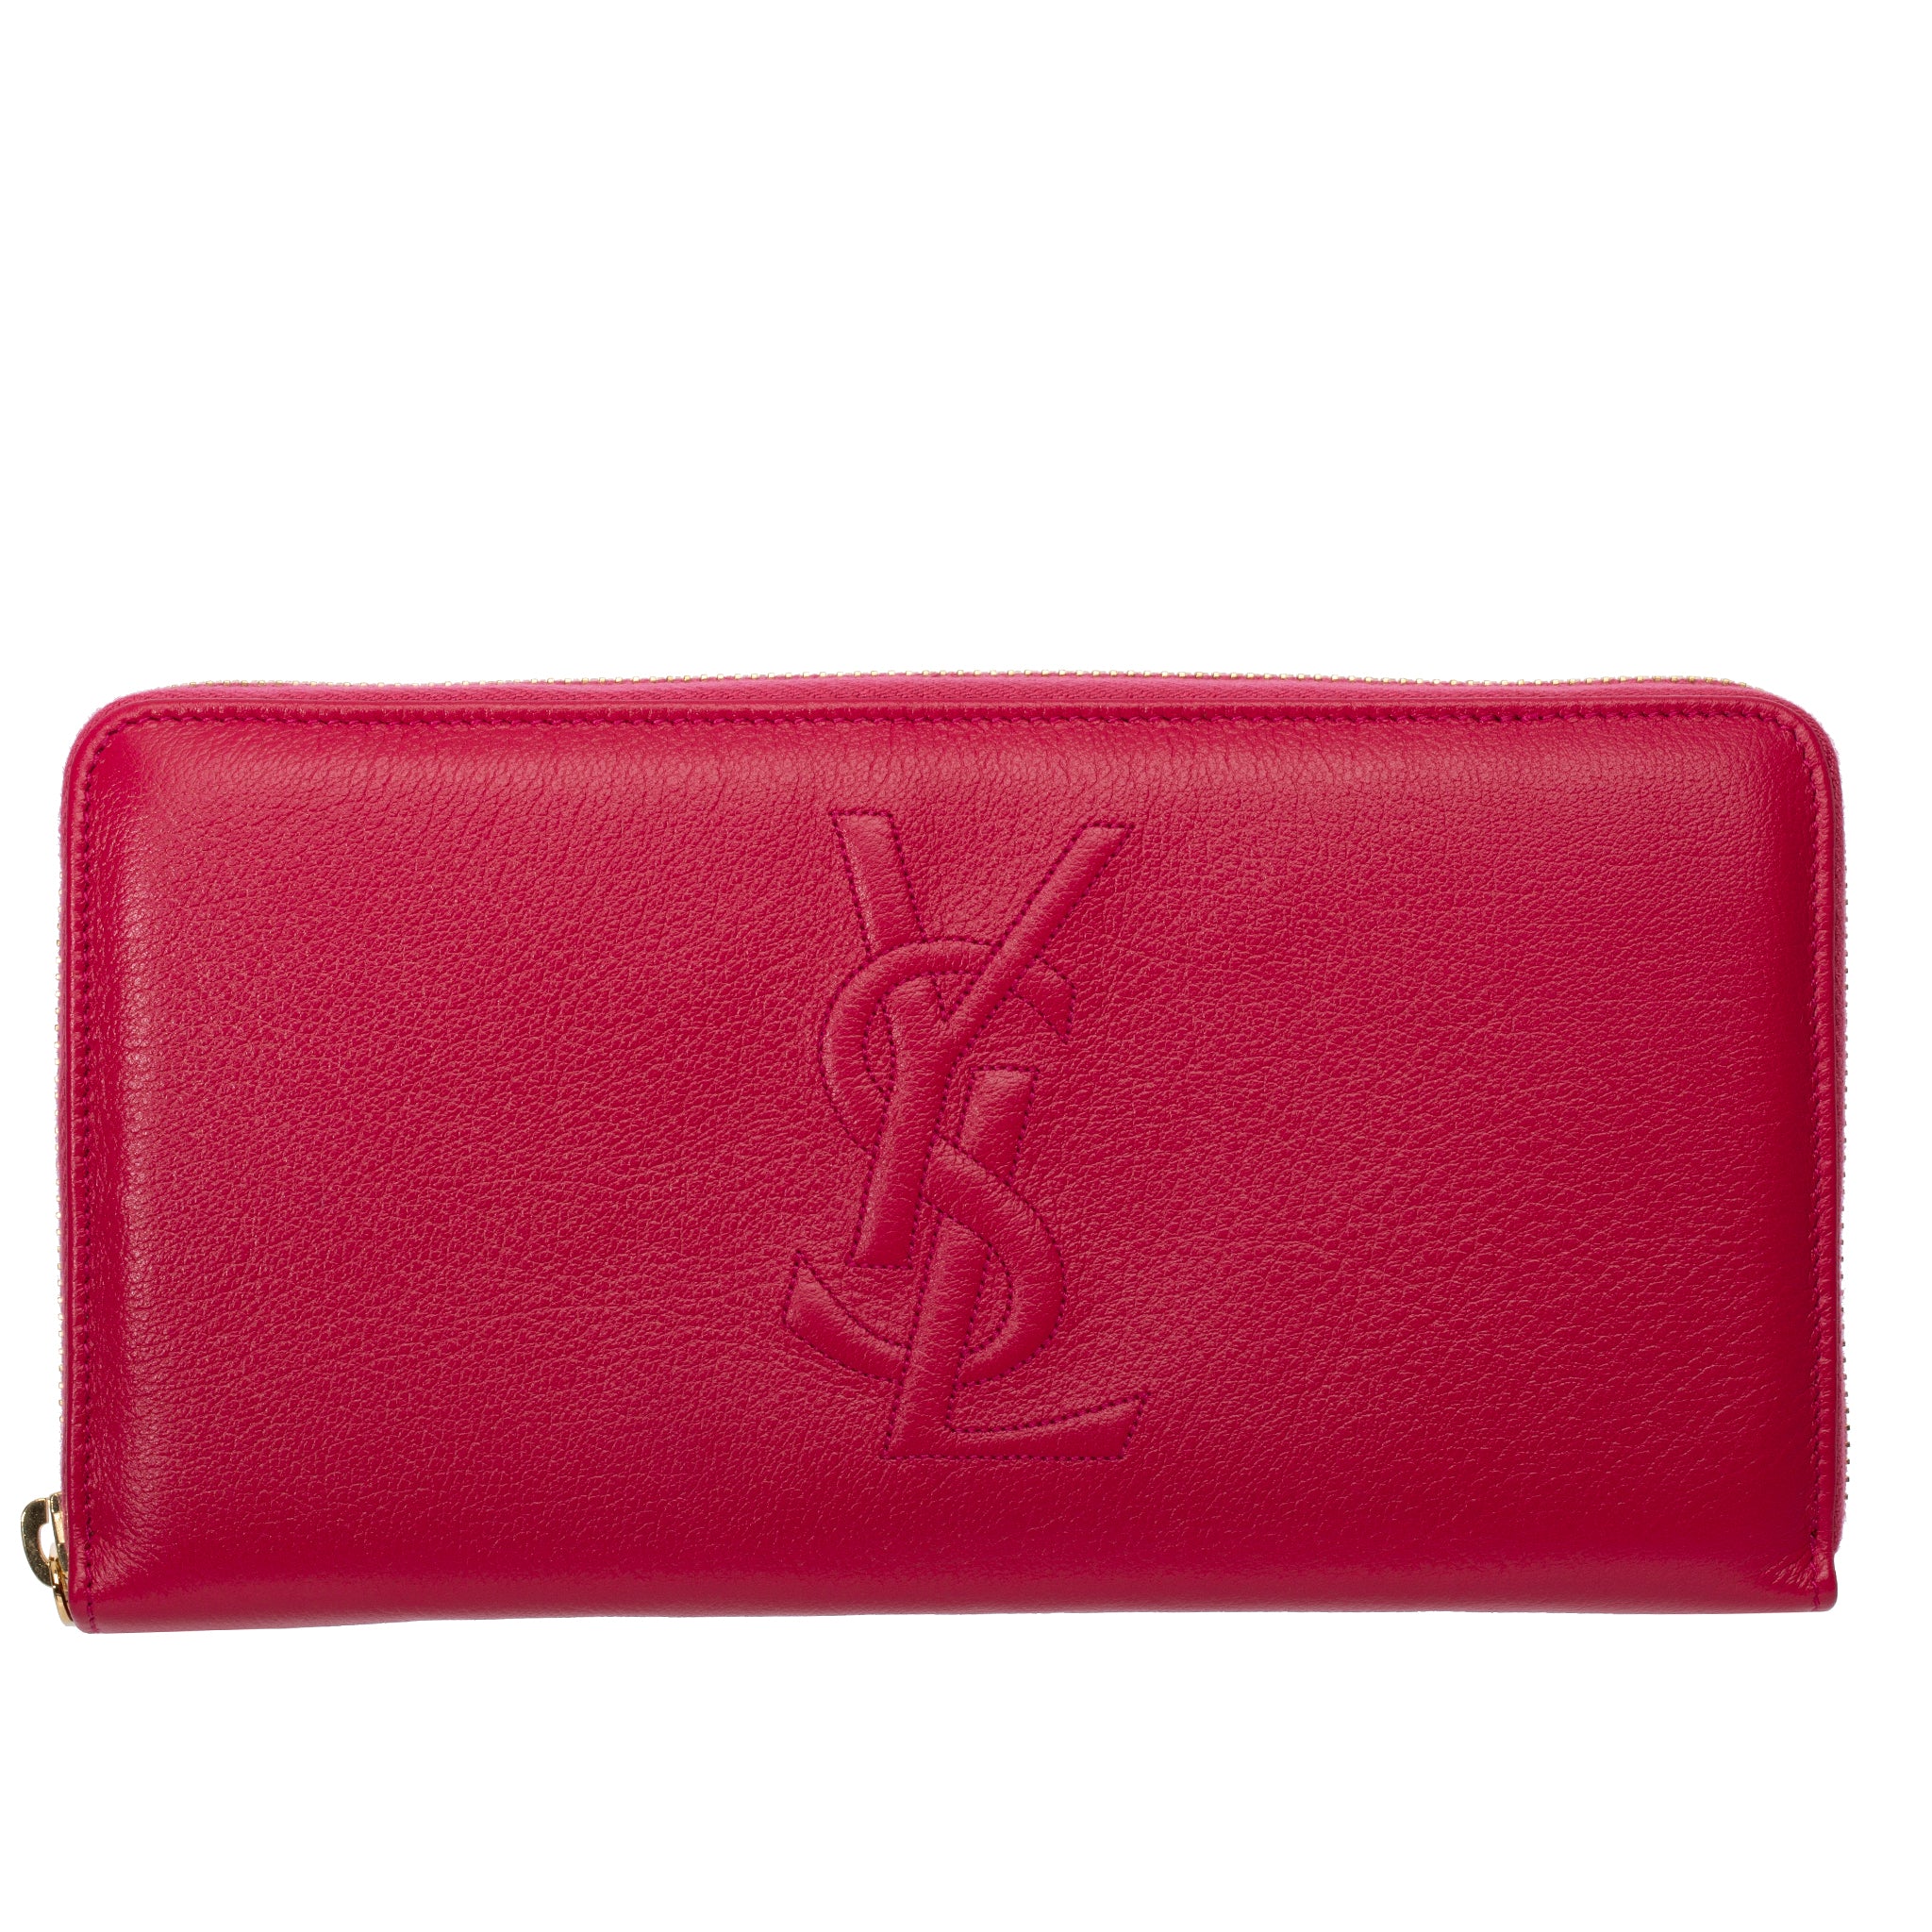 Yves Saint Laurent Pink Leather Wallet